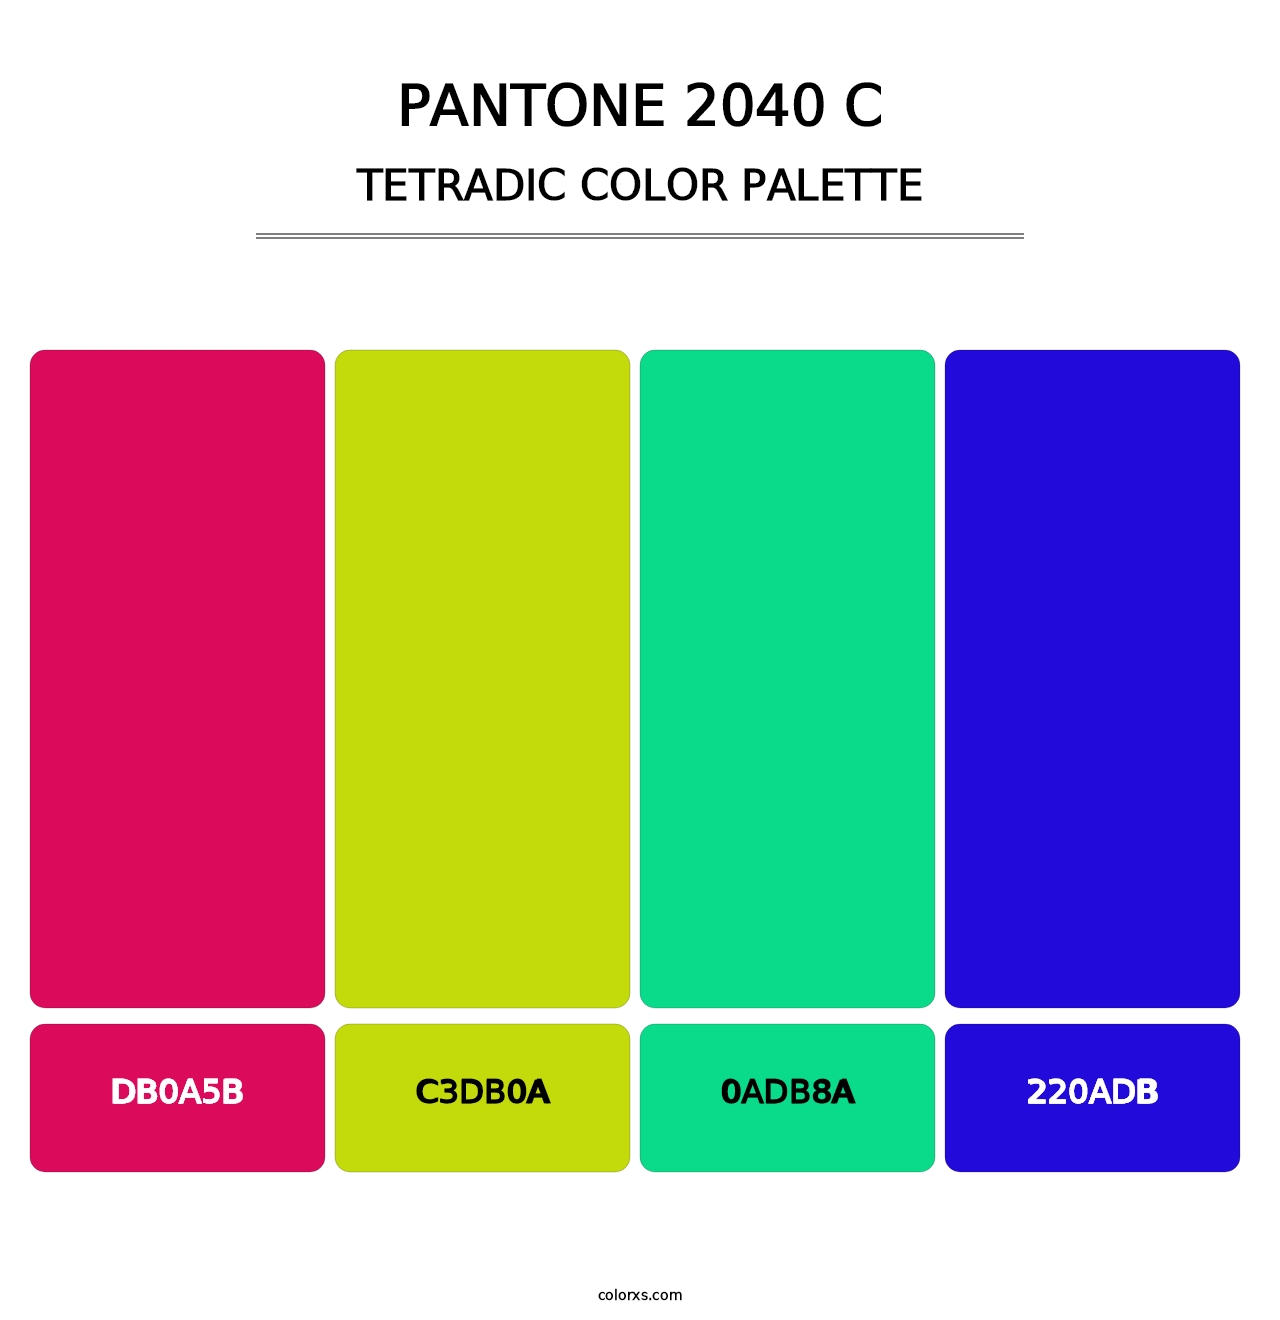 PANTONE 2040 C - Tetradic Color Palette